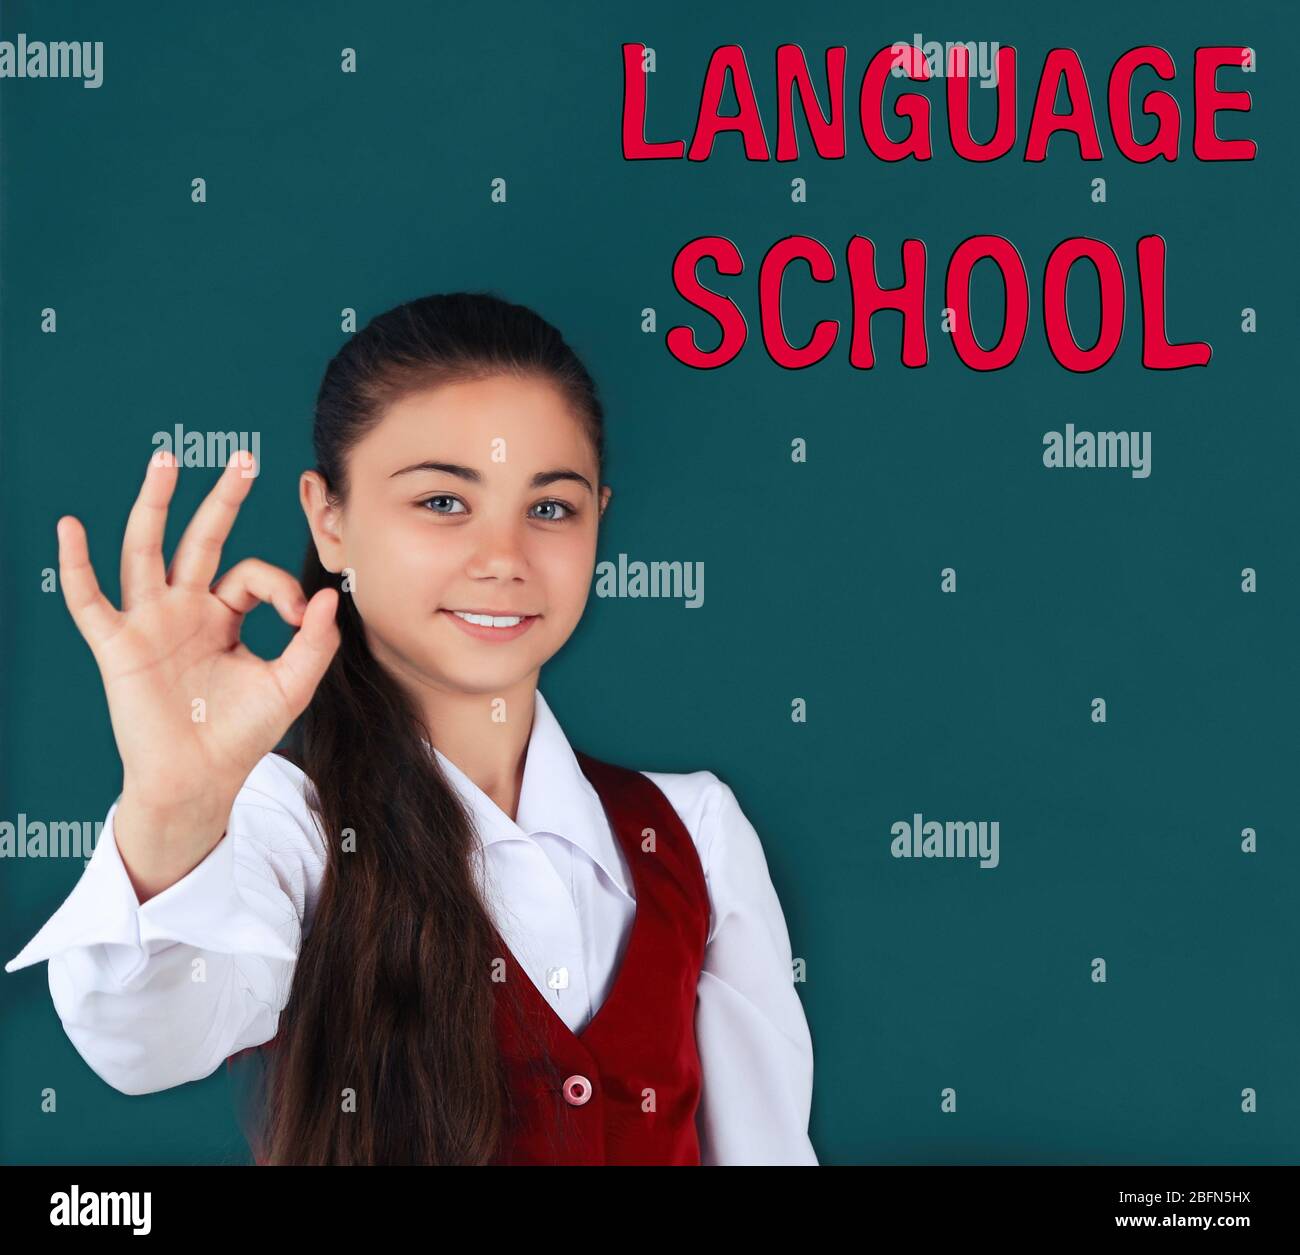 Language school concept with schoolgirl Stock Photo